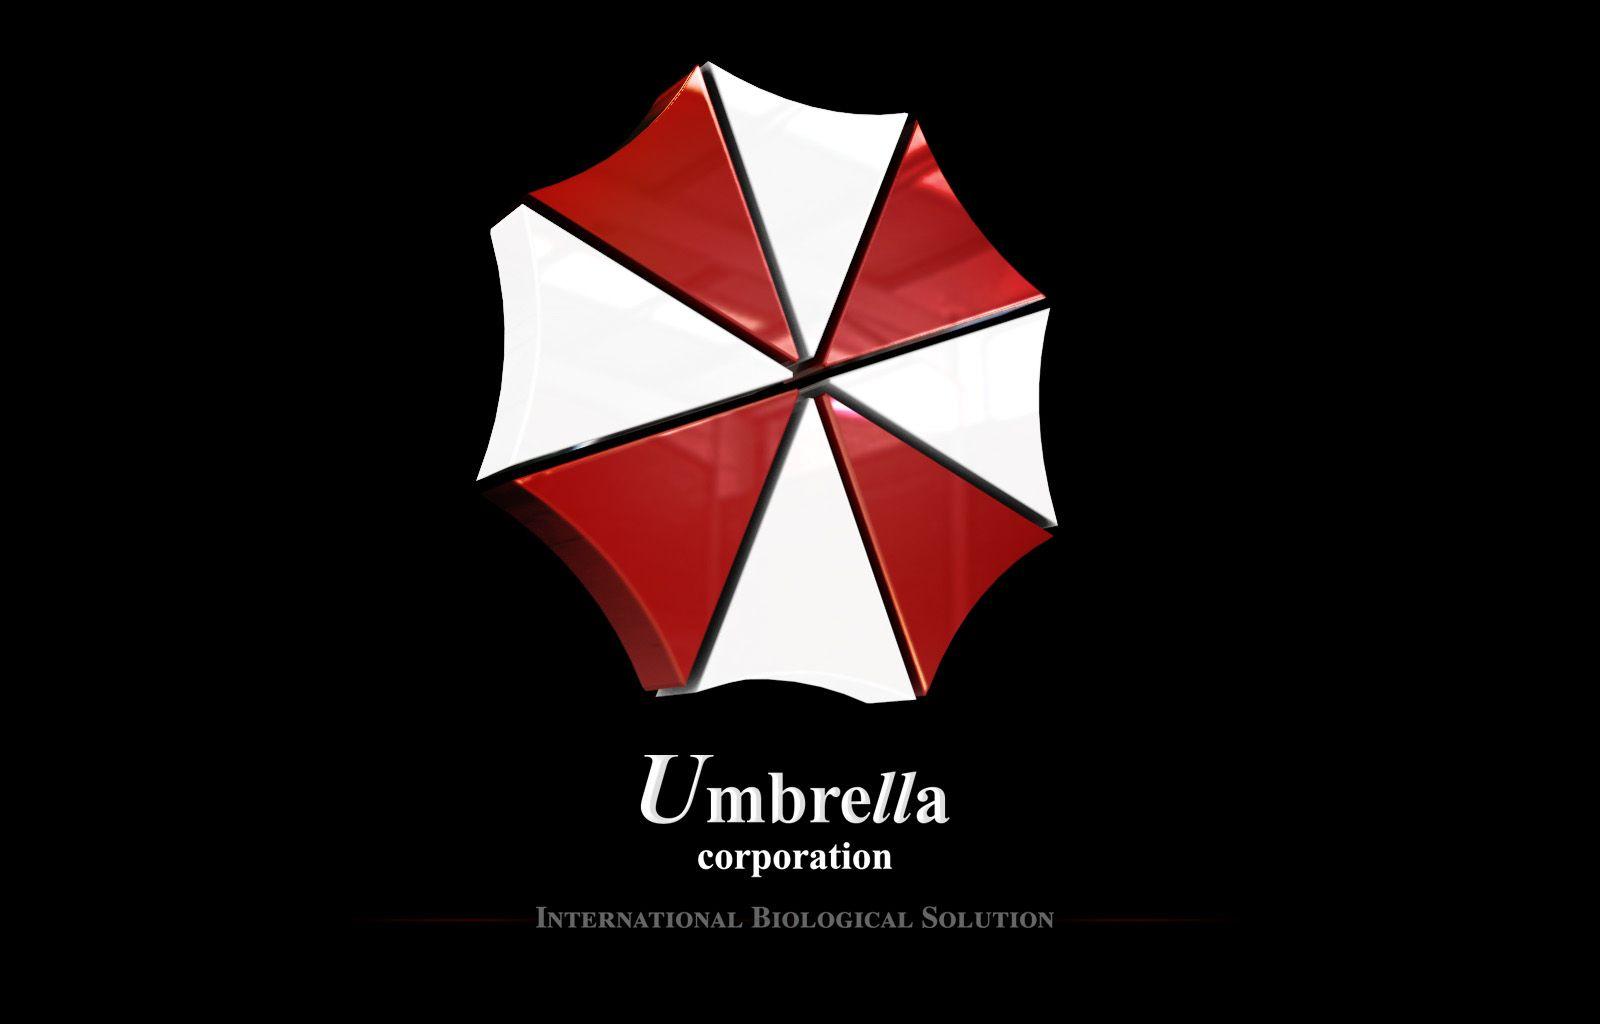 Umbrella Corporation Image Free Download